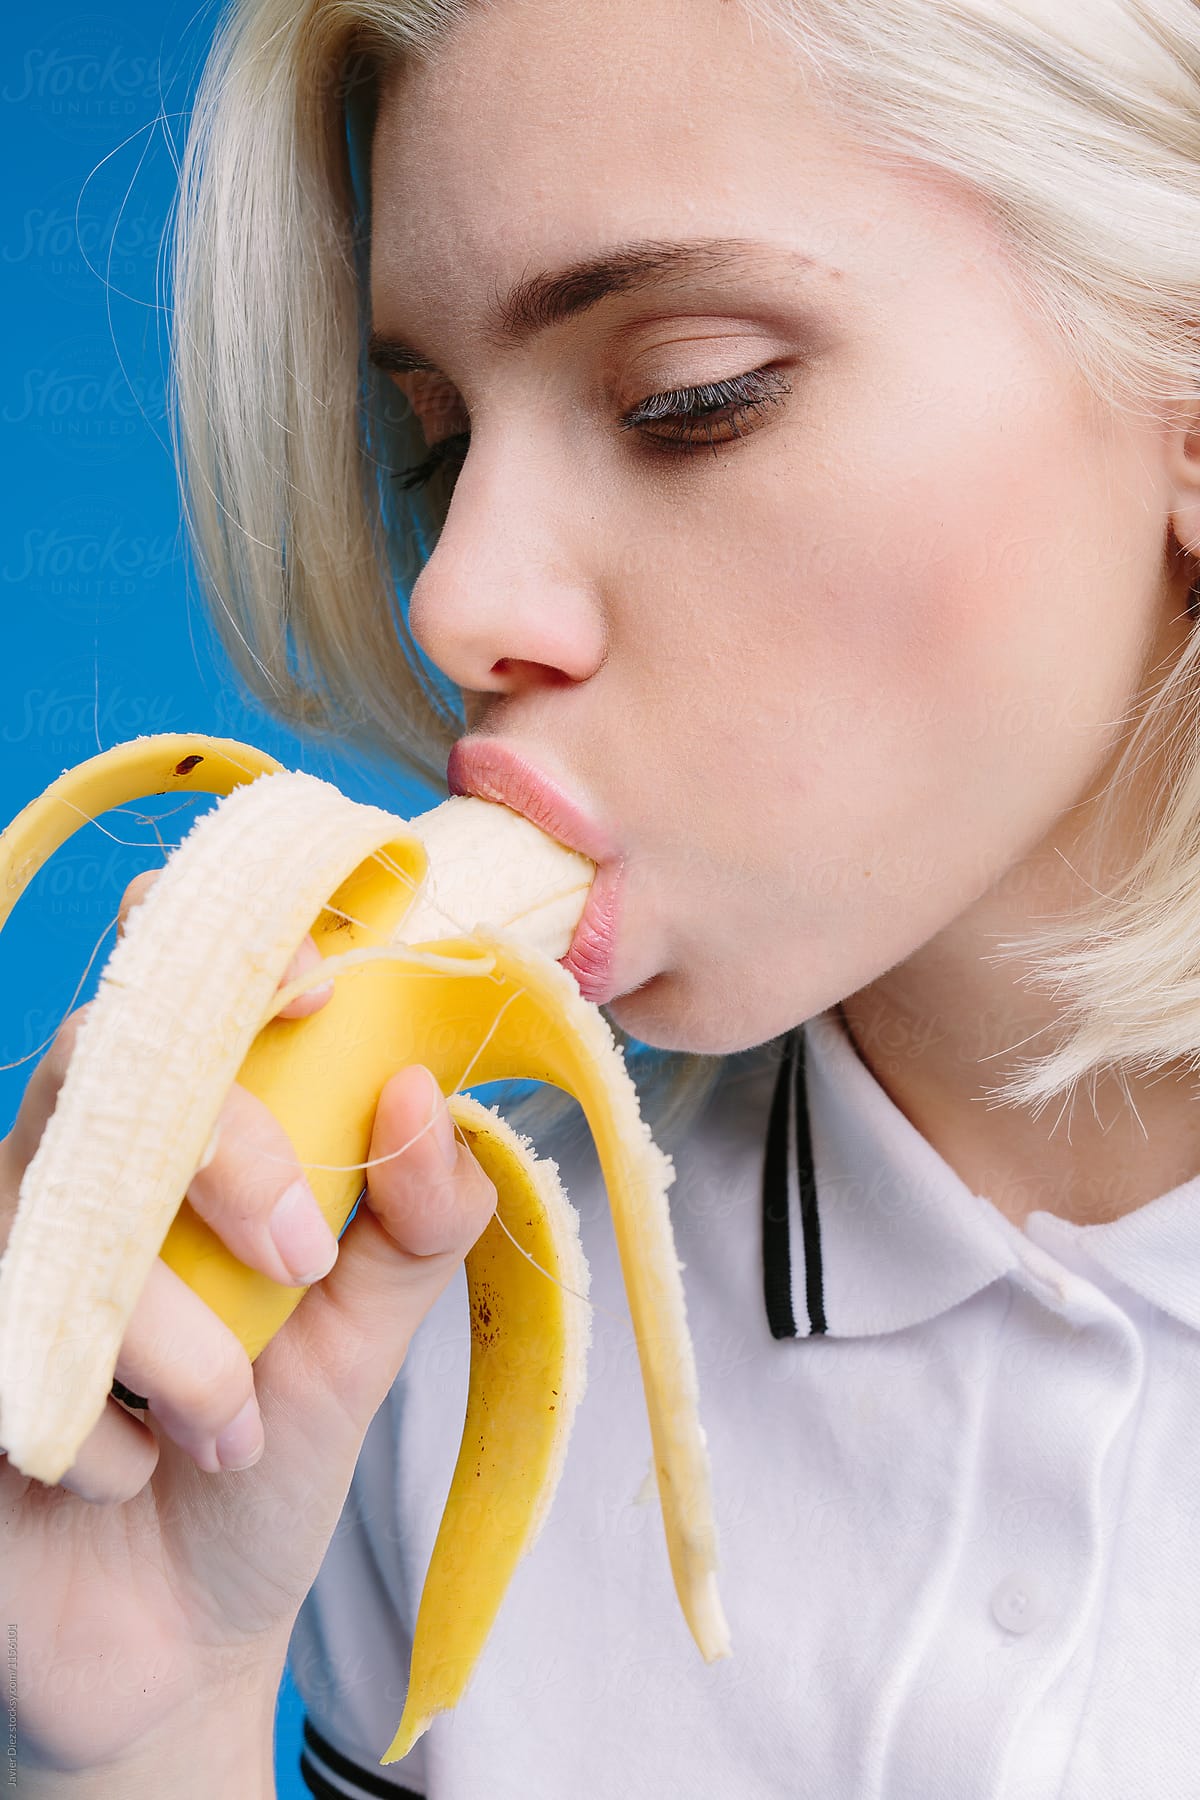 Blonde girl eating banana seductively by Javier Díez - Stocksy United